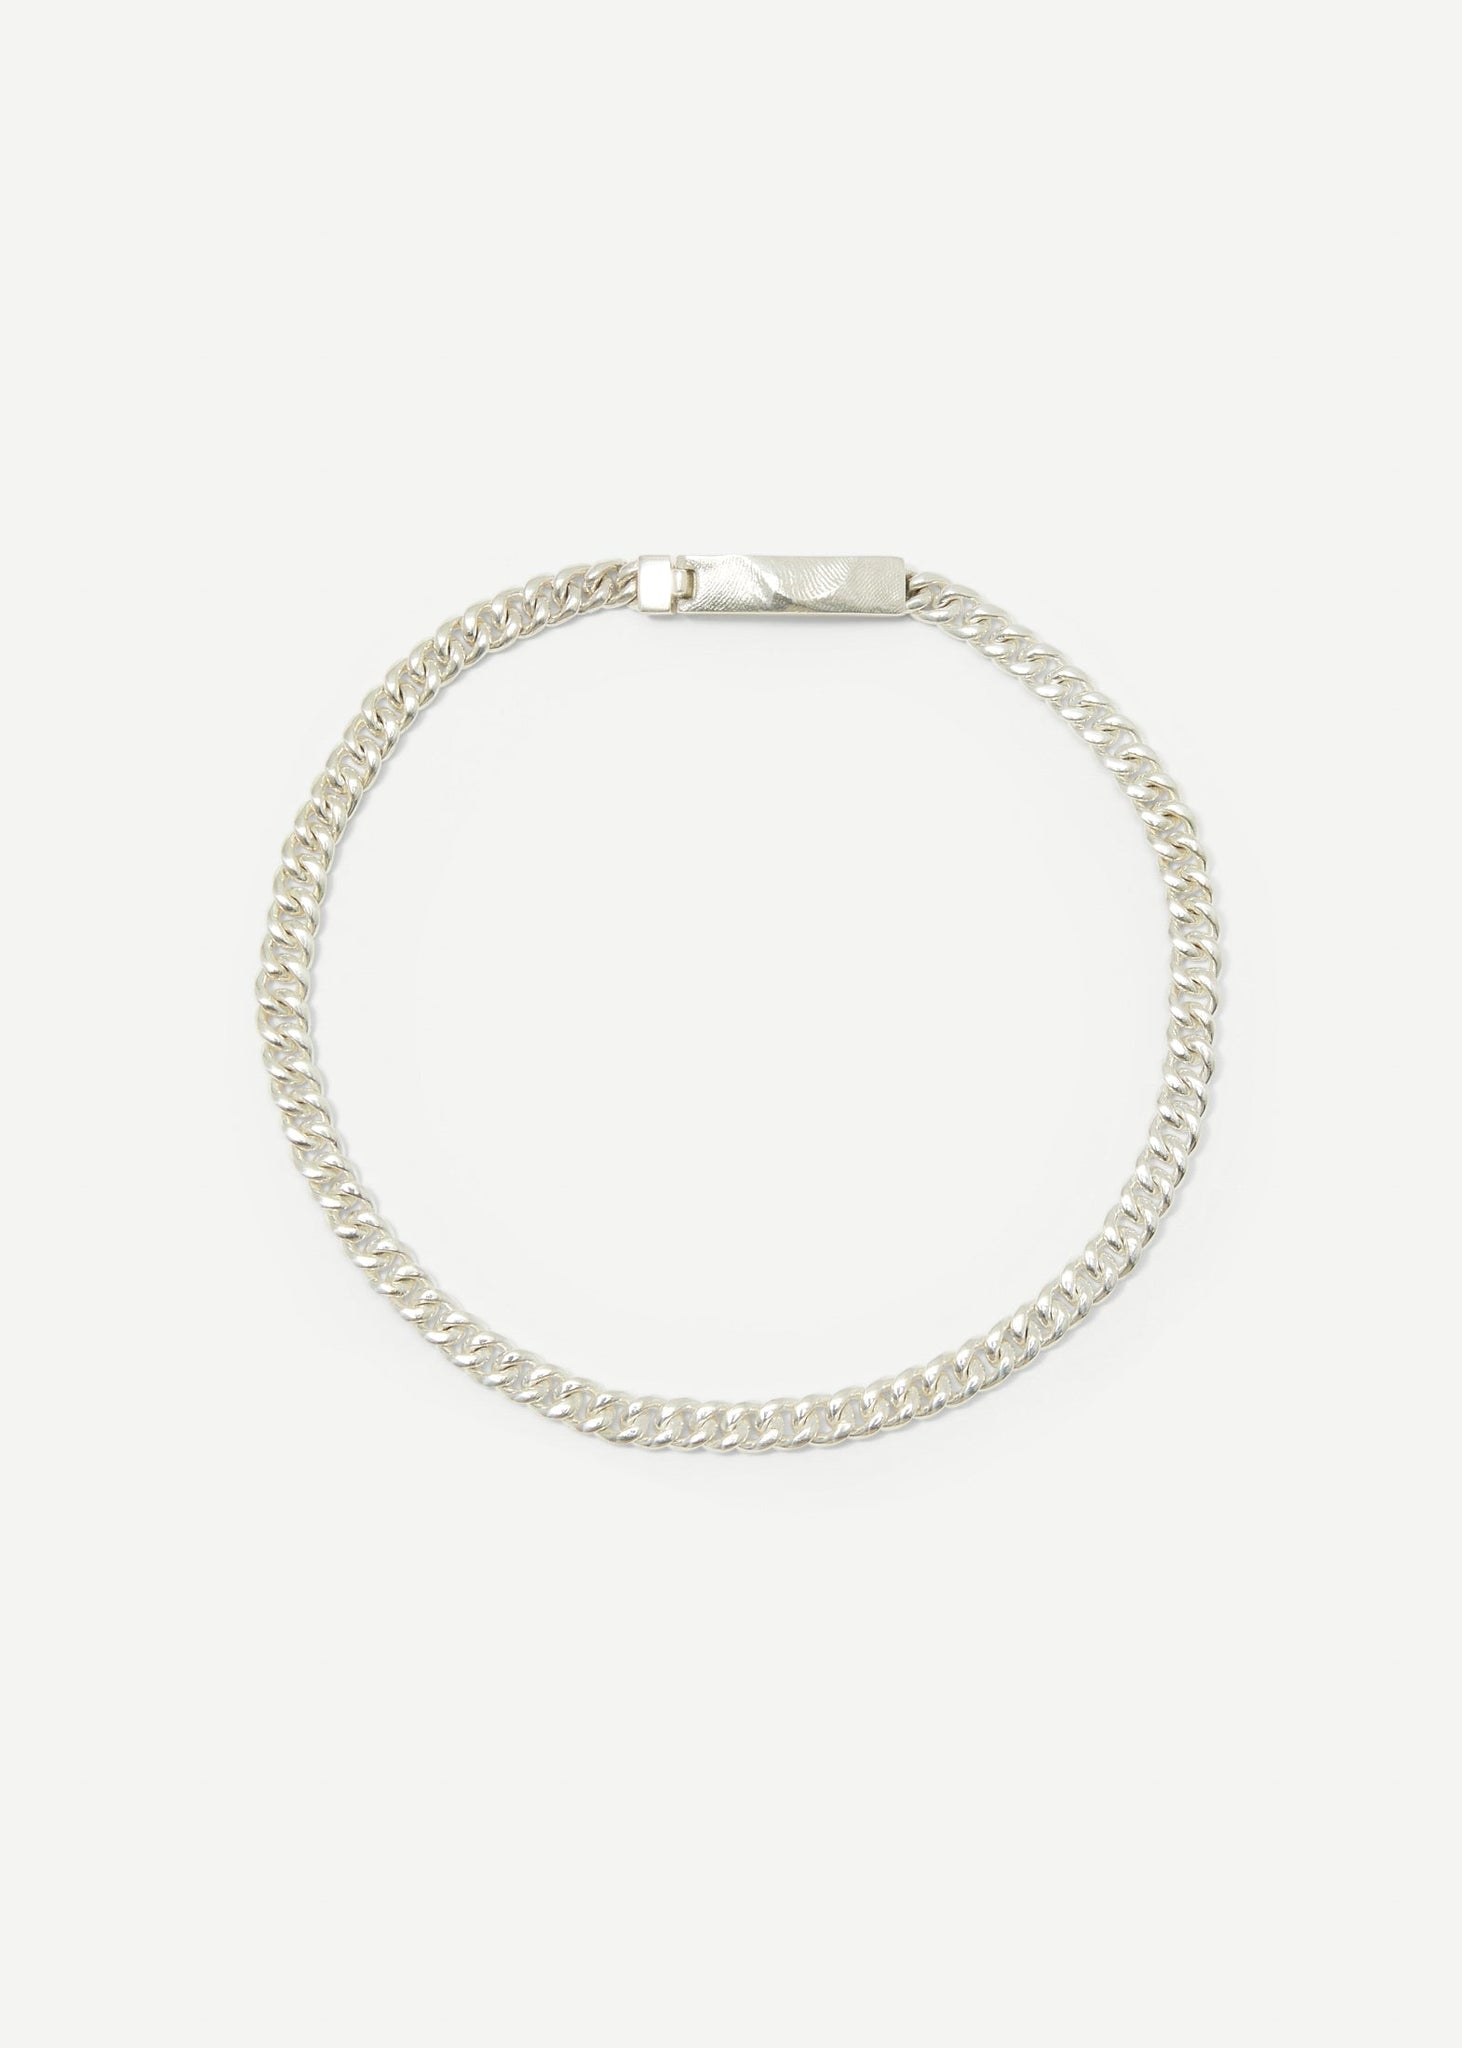 Molded Chain Necklace - Necklaces - Cornelia Webb - 1